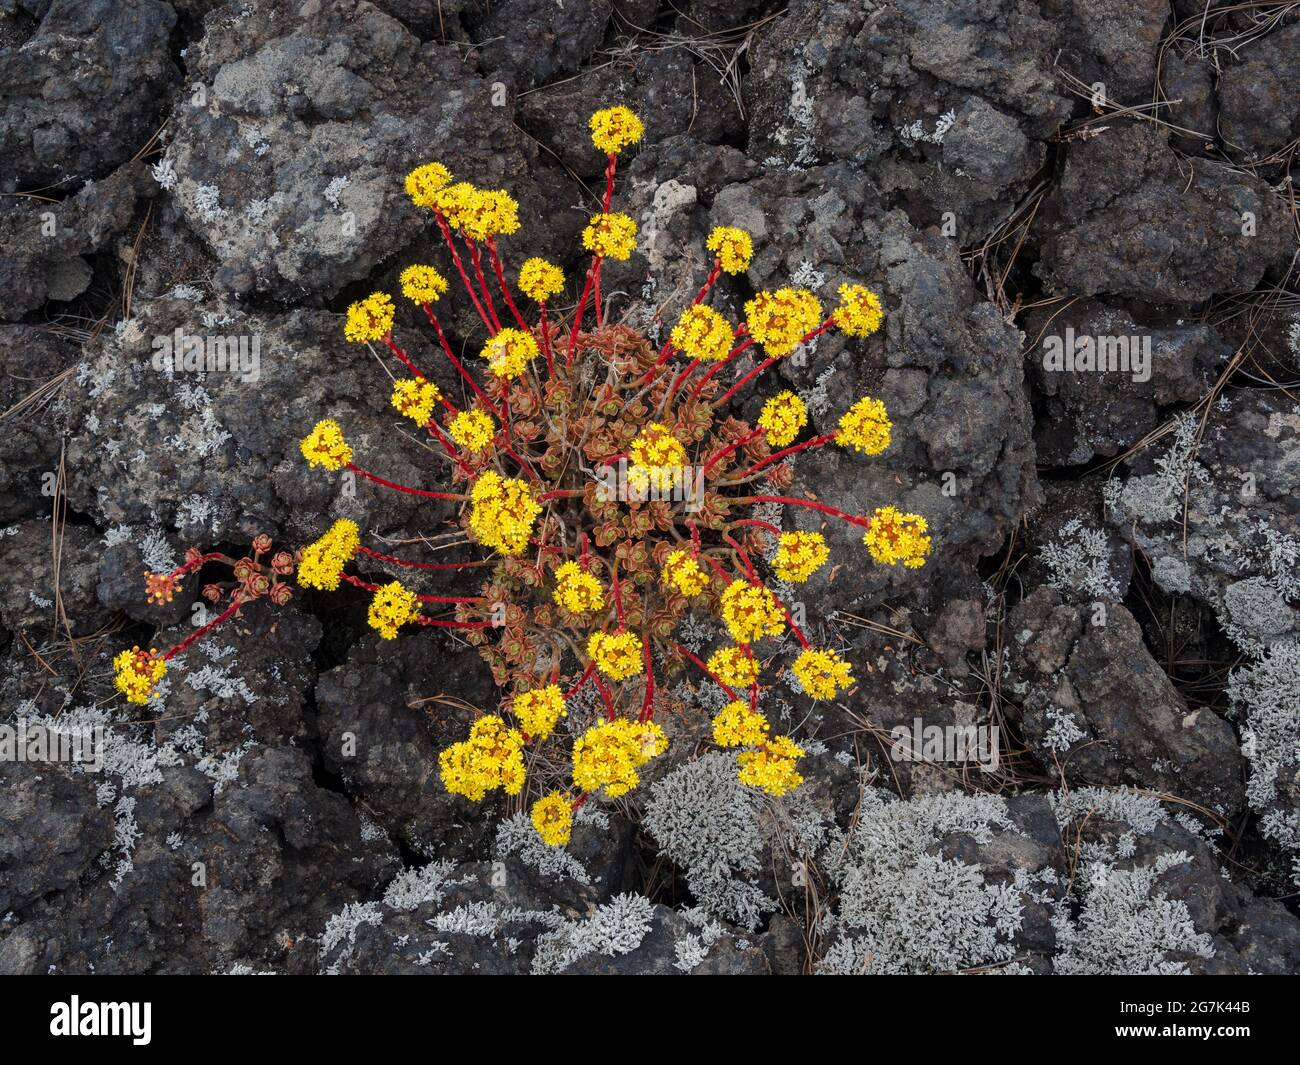 Top view of growing Alyssum Obovatum plants among rocks in Tenerife island, Spain Stock Photo